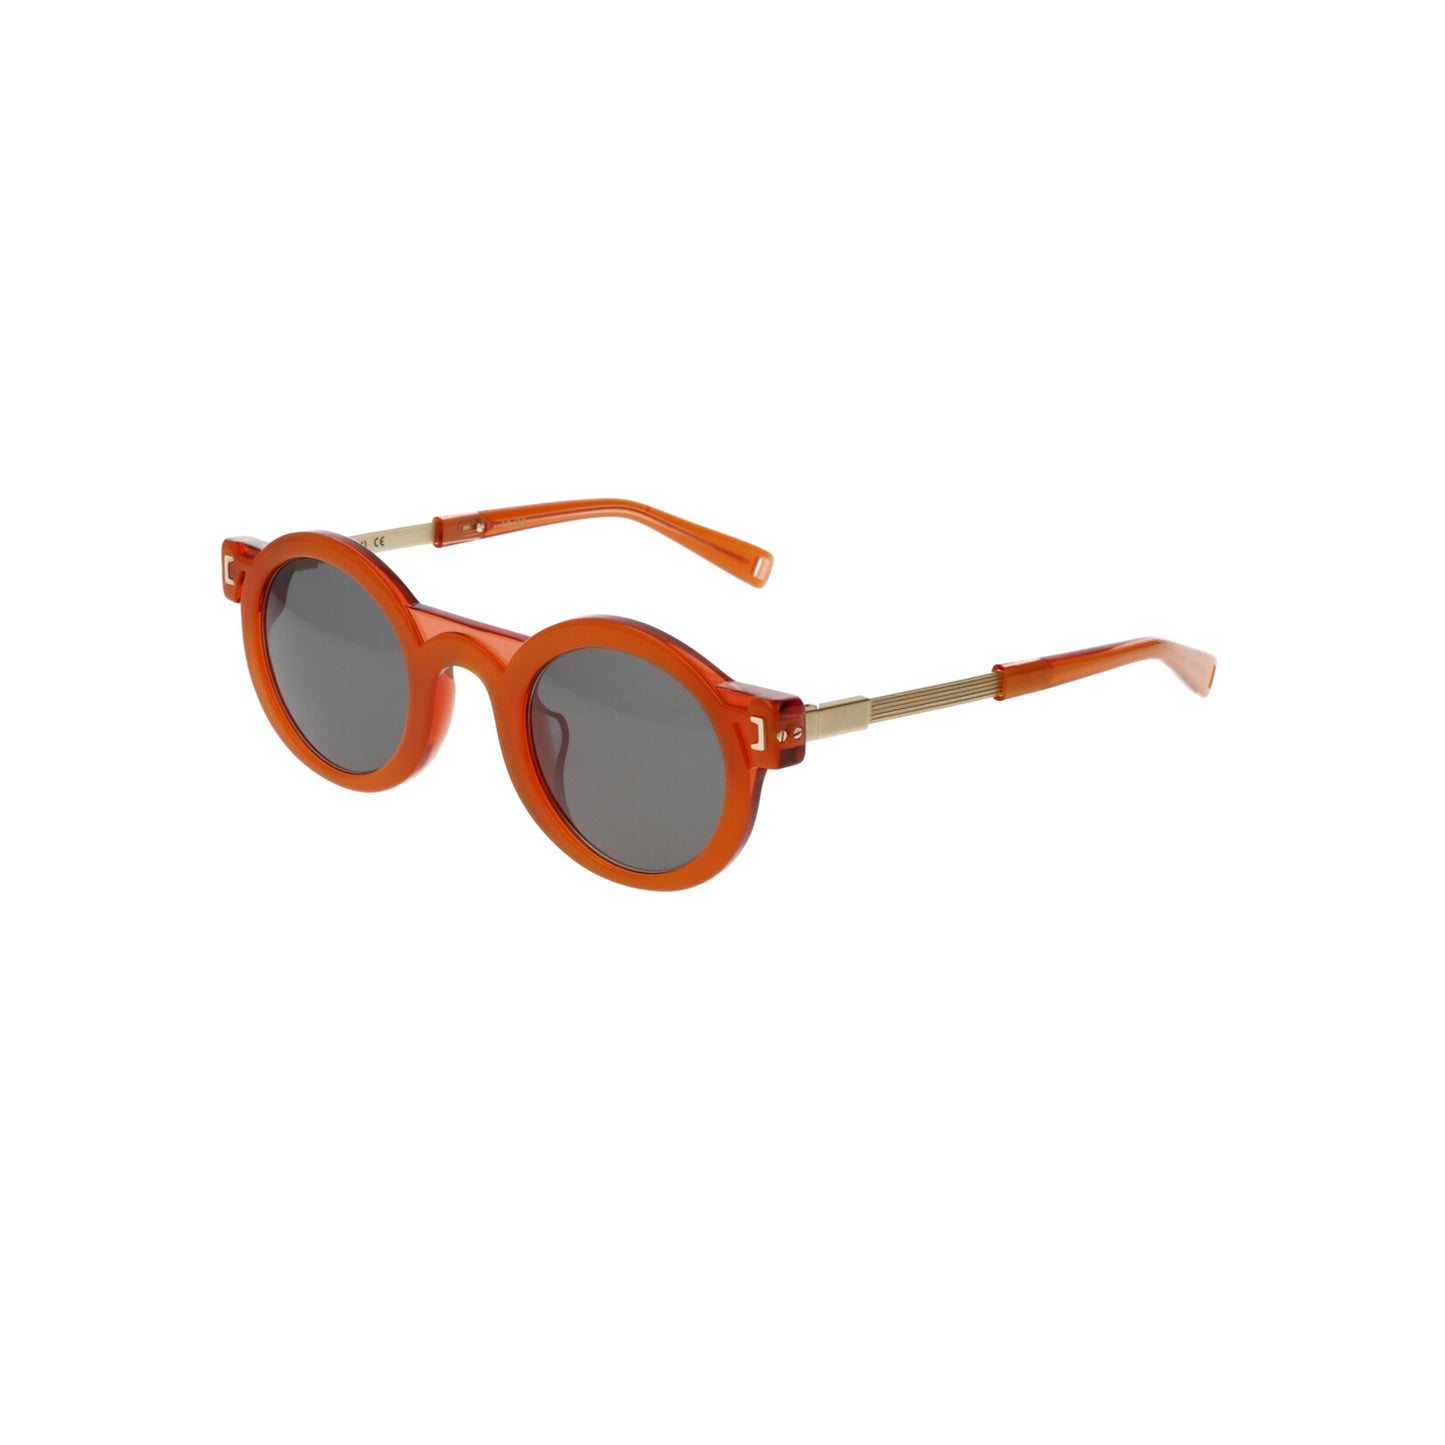 Mexico M1 Sunglasses